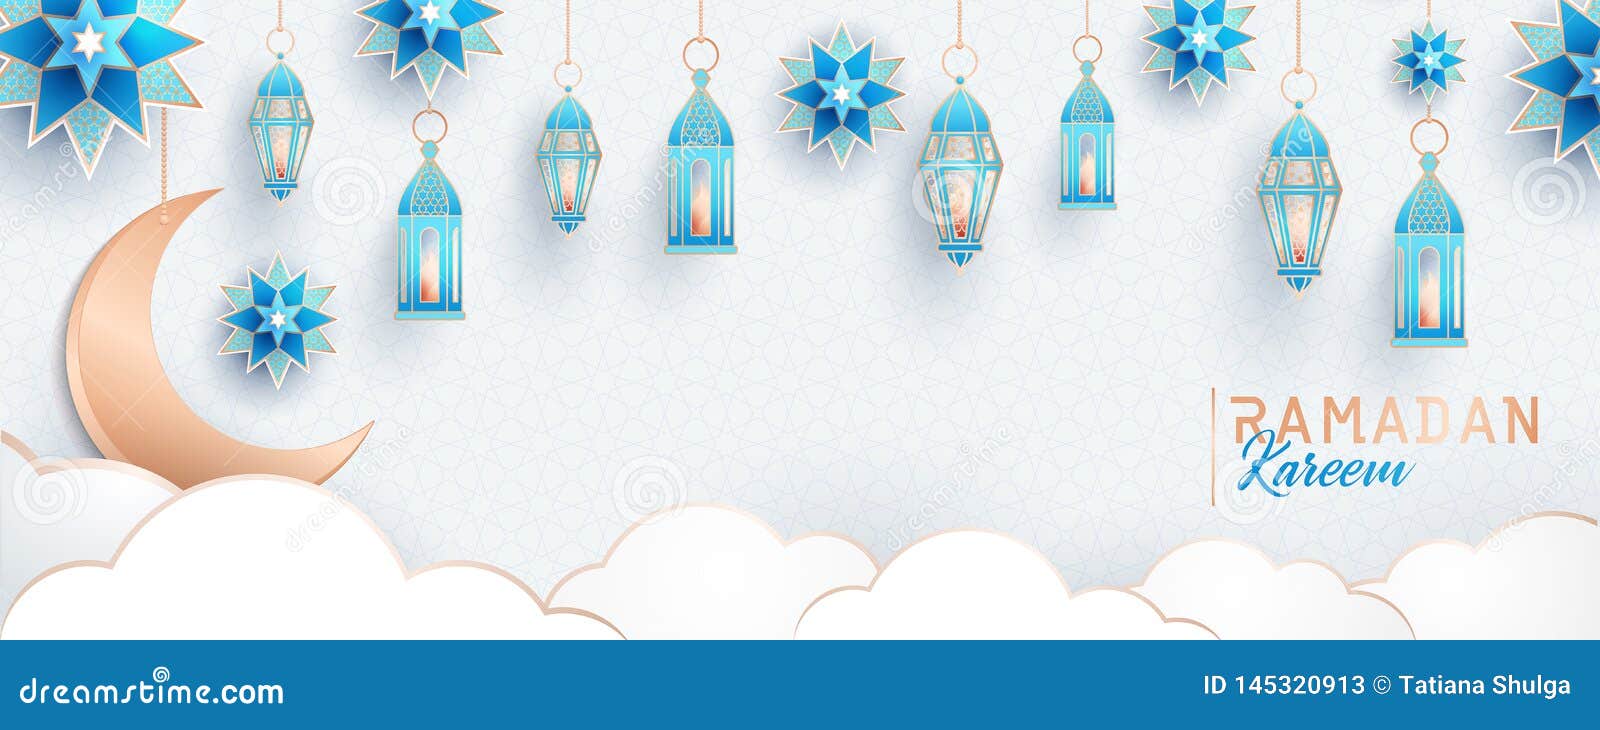 ramadan kareem concept horizontal banner